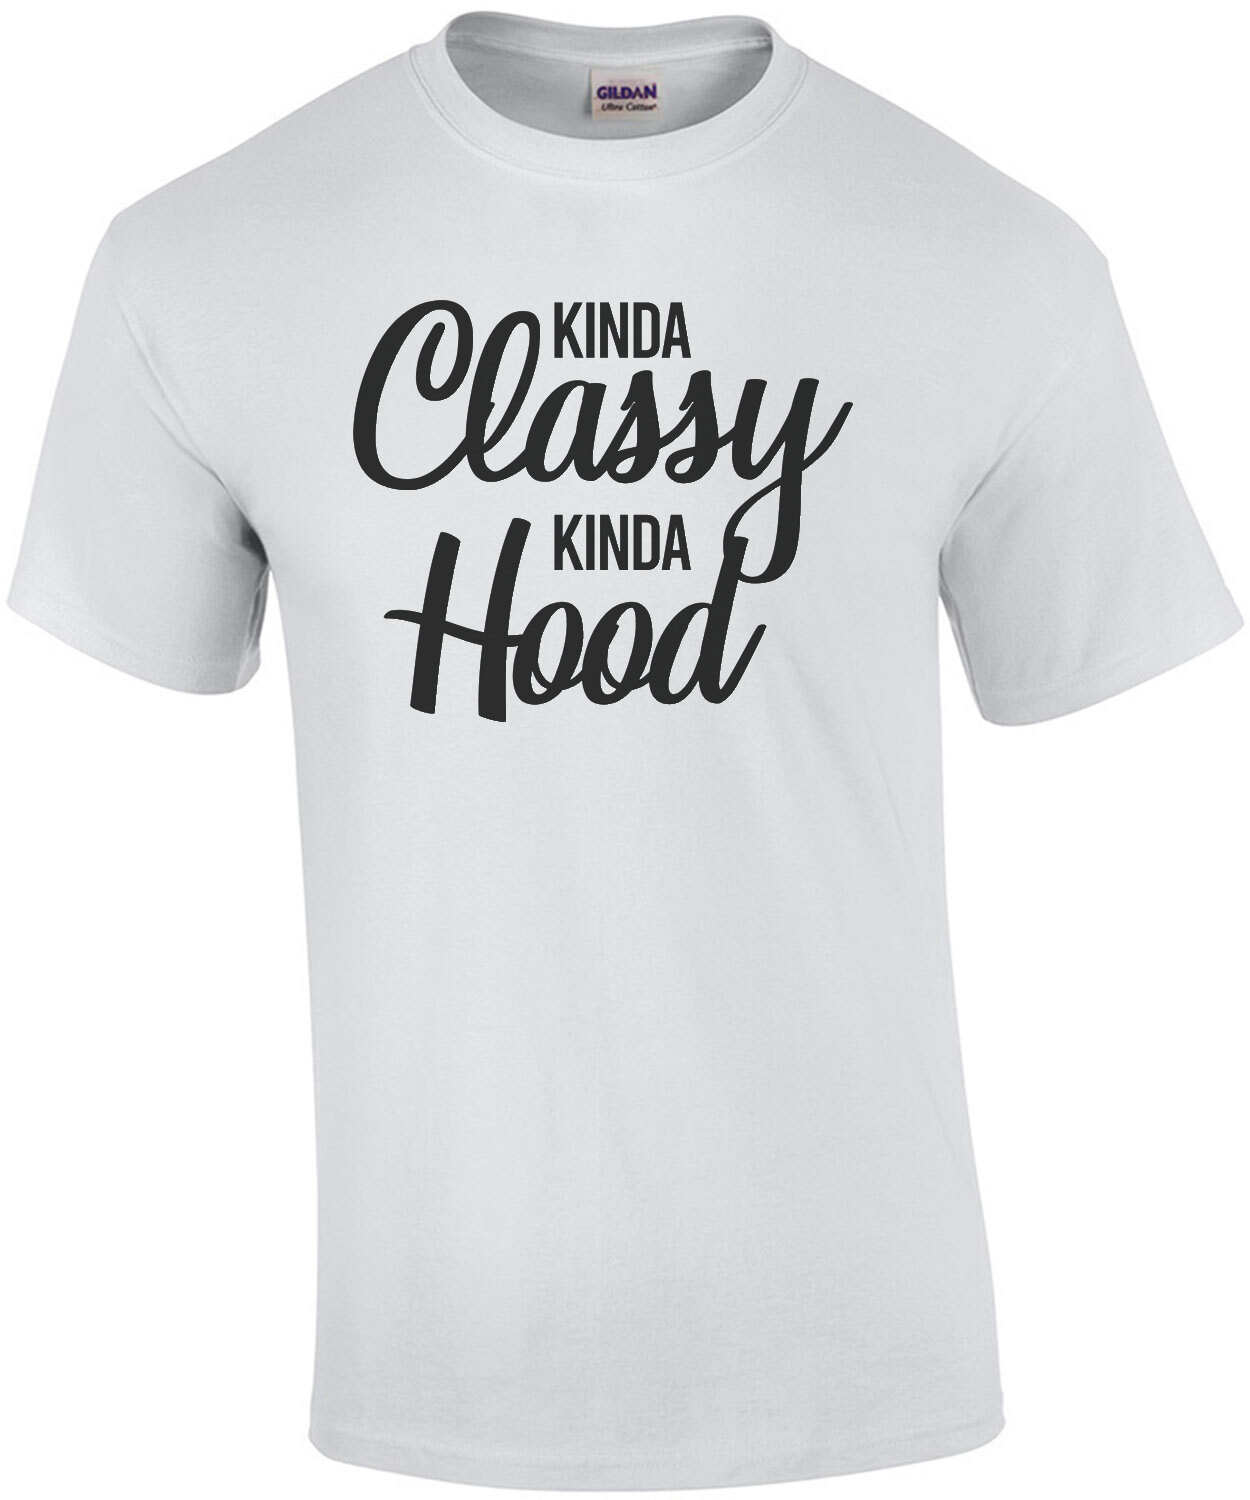 Kinda Classy - Kinda Hood - Funny ladies T-Shirt